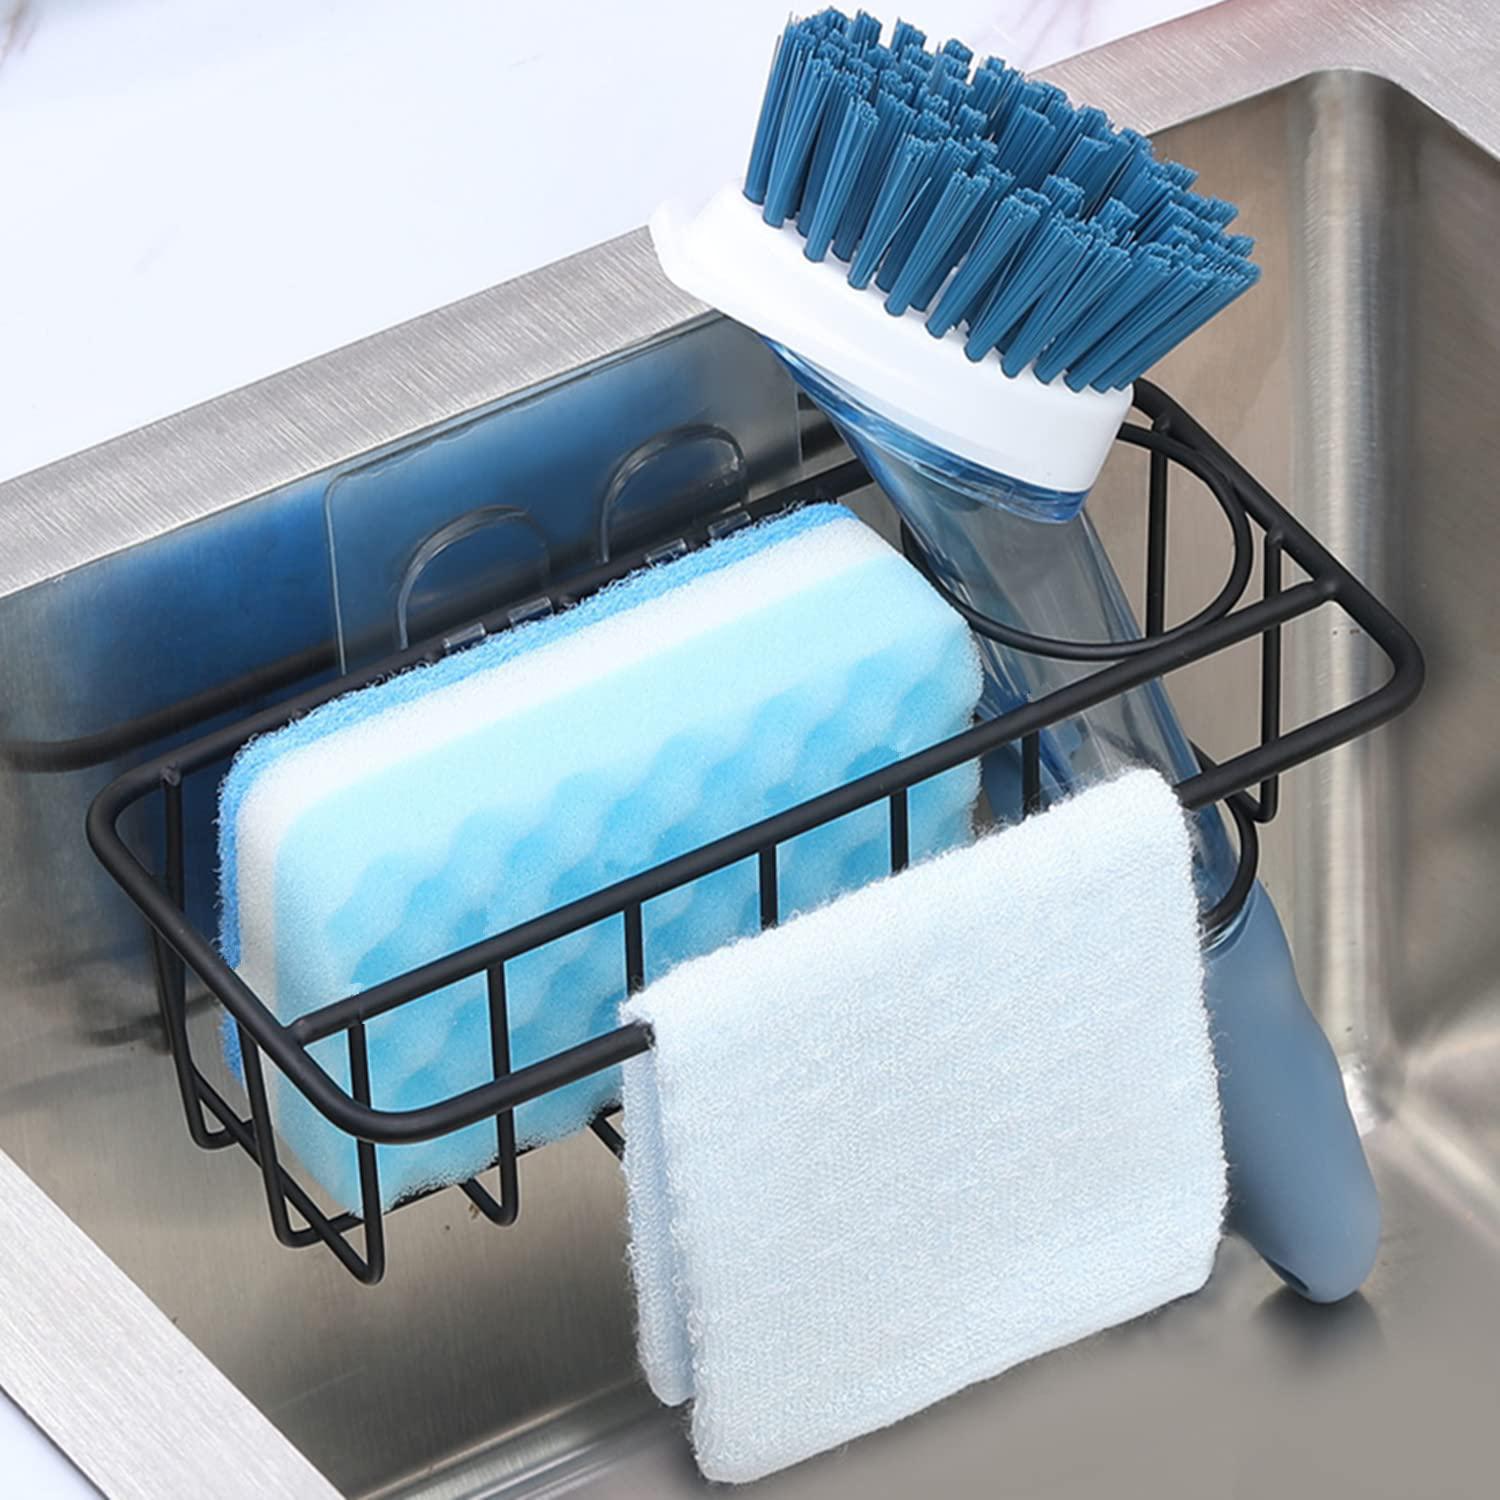 dolris sponge holder for kitchen sink, sink caddy, 3 in 1 adhesive sponge holder + brush holder + dish cloth hanger, sus304 s